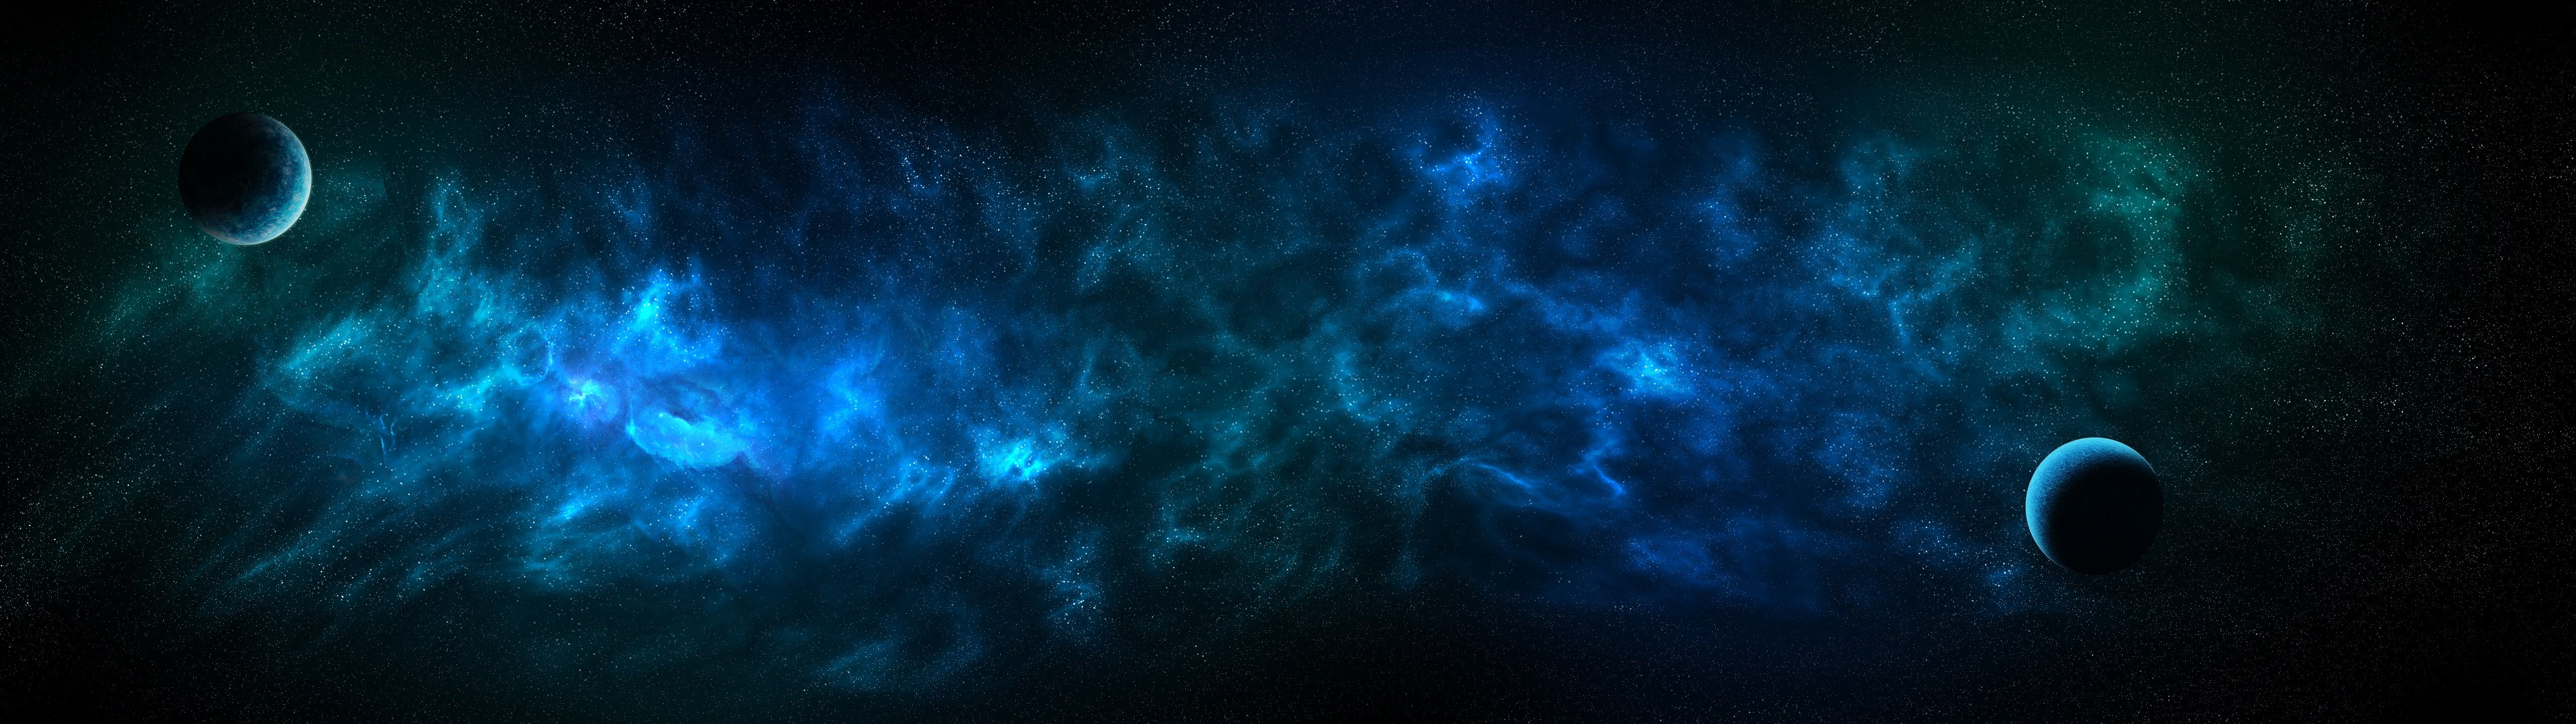 space, blue, planet, dual display, nebula, starsx1440 Wallpaper